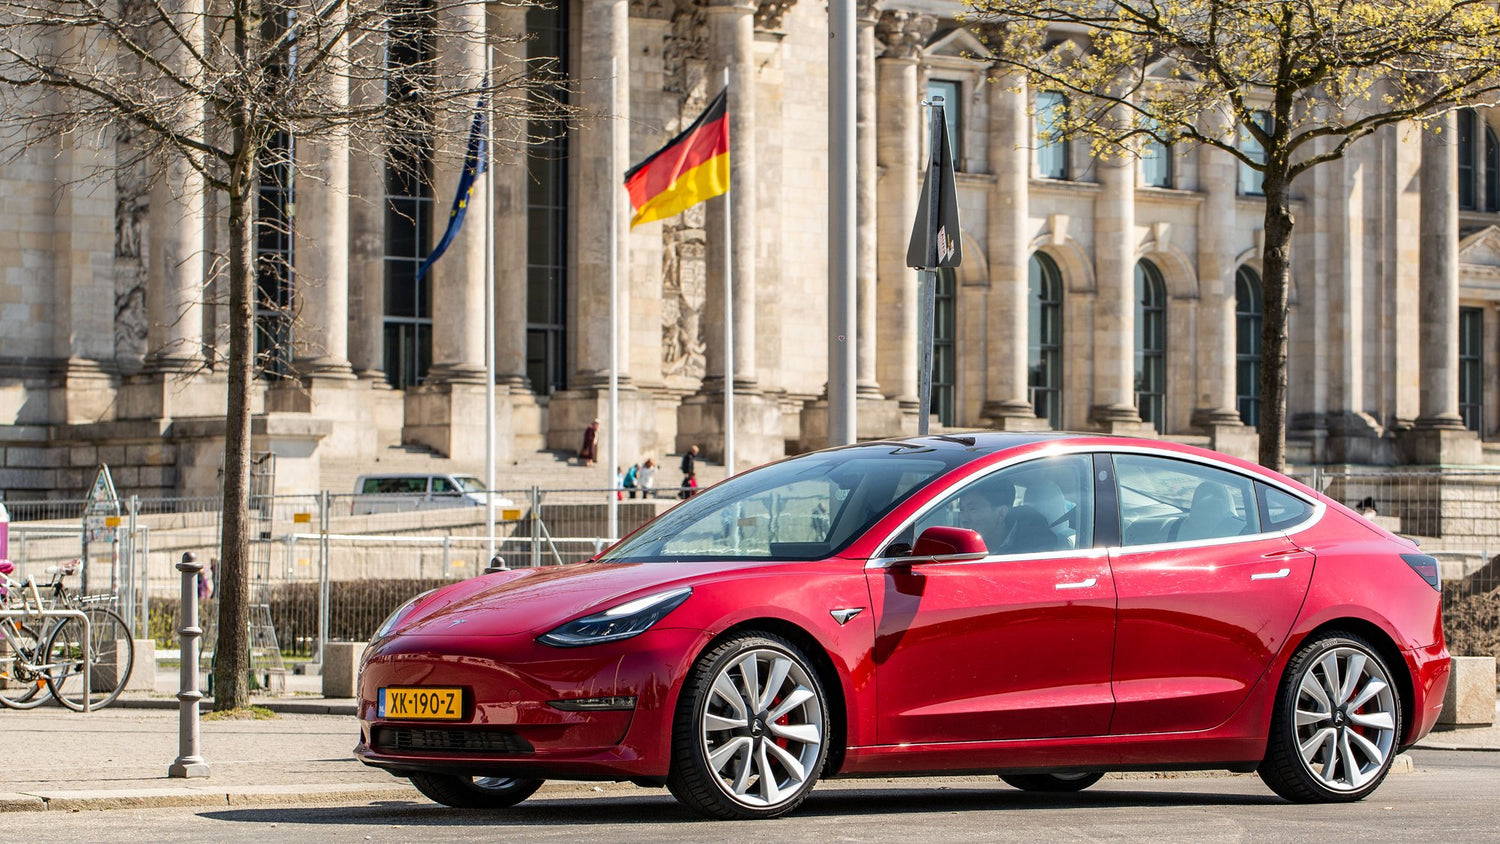 Tesla August Germany Sales Soar 457% YoY, Representing Unprecedented EV Sales for the Country